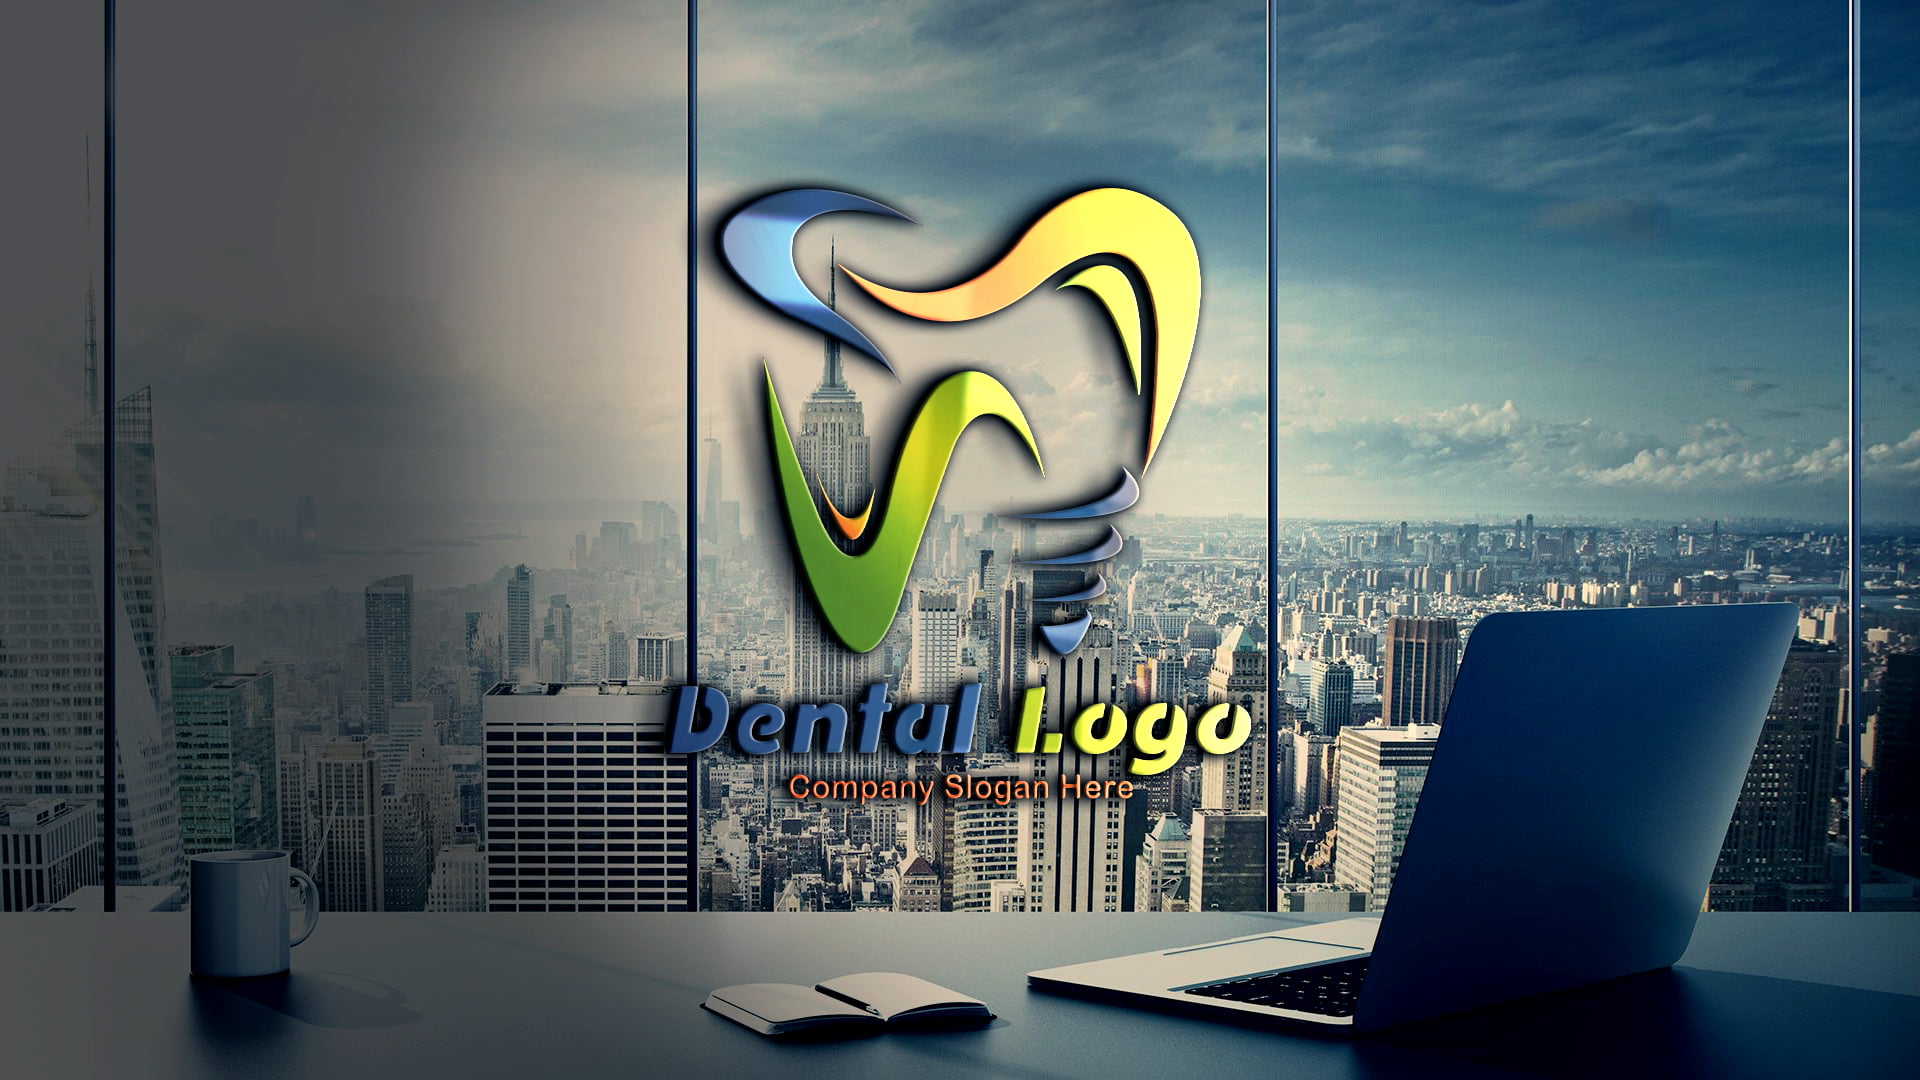 Dental Logo Template Download